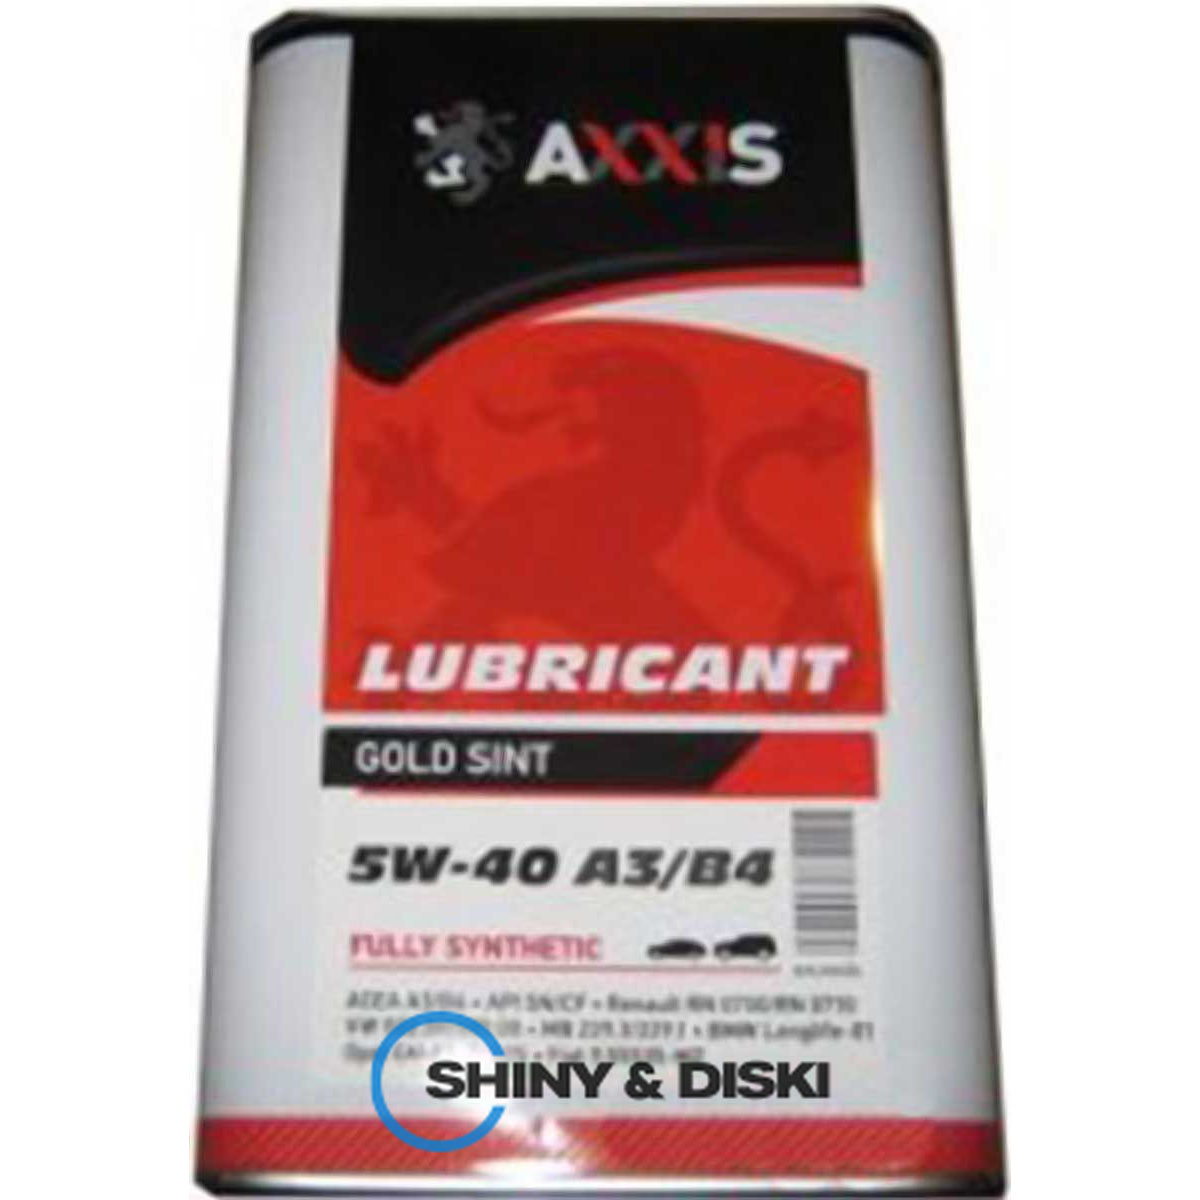 axxis gold sint 5w-40 a3/b4 (4л)